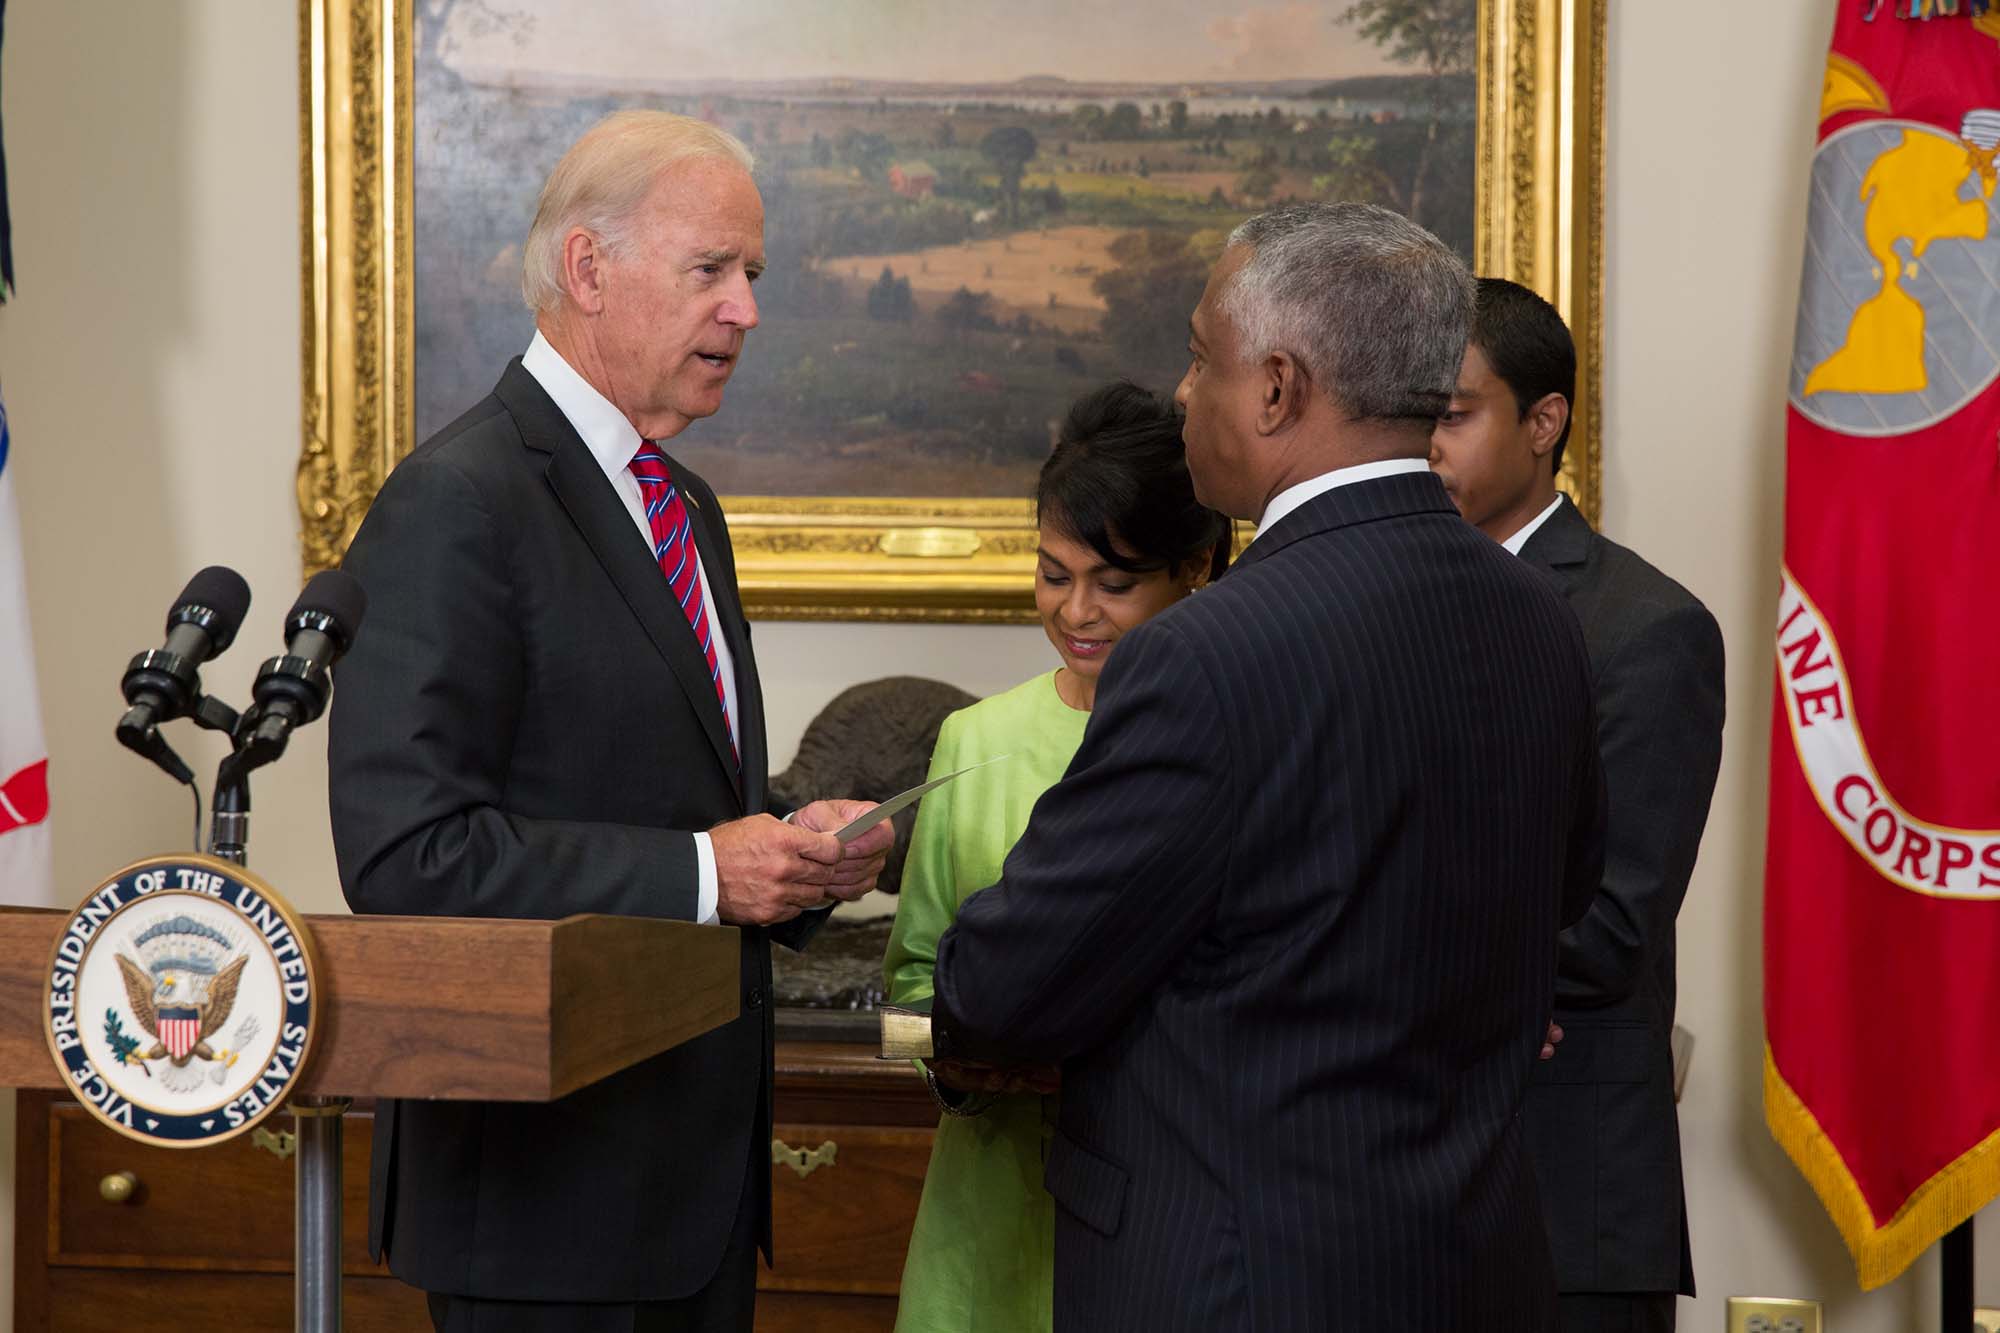 Vice President Joe Biden ceremonially swears in Todd Jones as Director of the Bureau of Alcohol, Tobacco, Firearms and Explosives